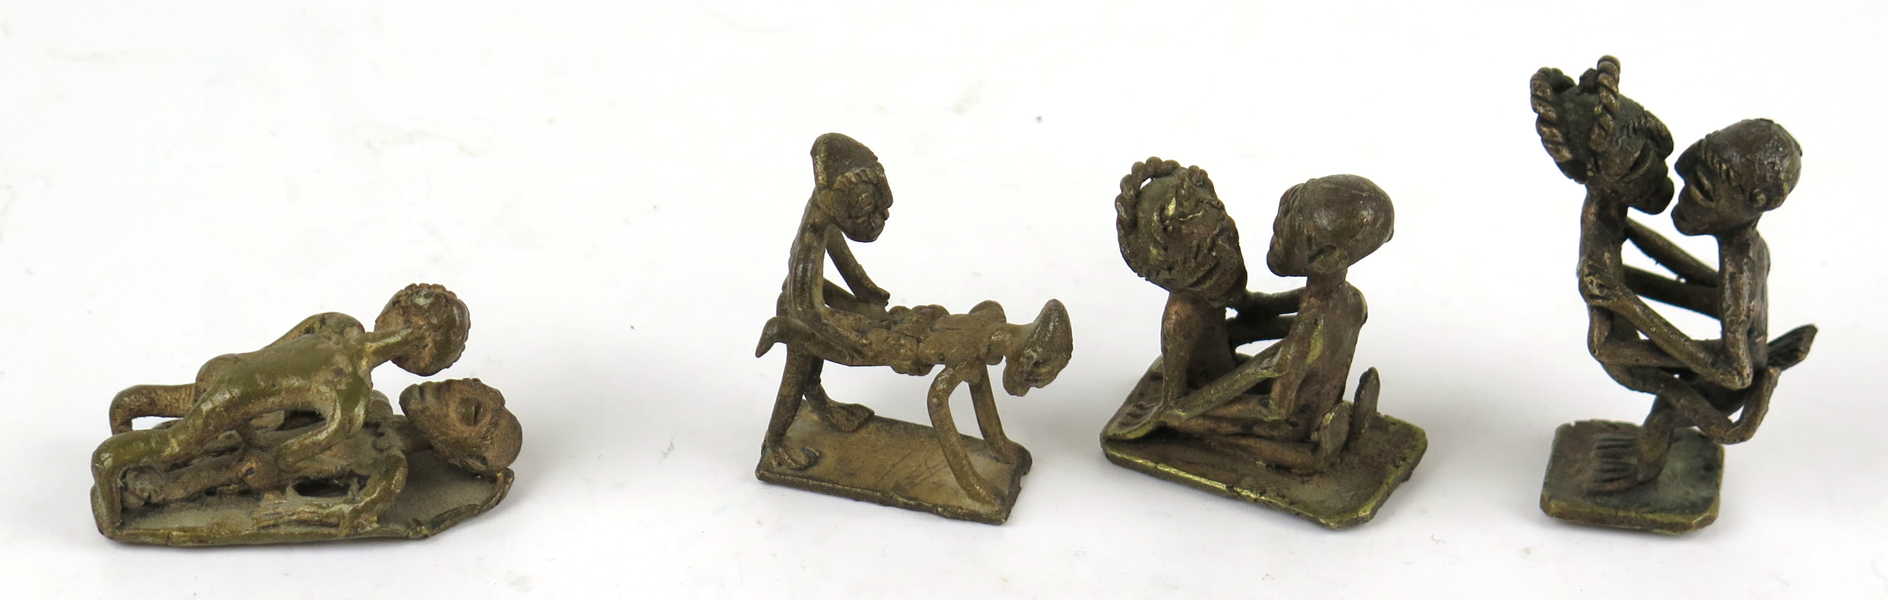 Skulpturer, 4 st, brons, cire-perdueteknik, Västafrika 1900-talets 2 hälft, _14787a_8d9b001444f9a90_lg.jpeg